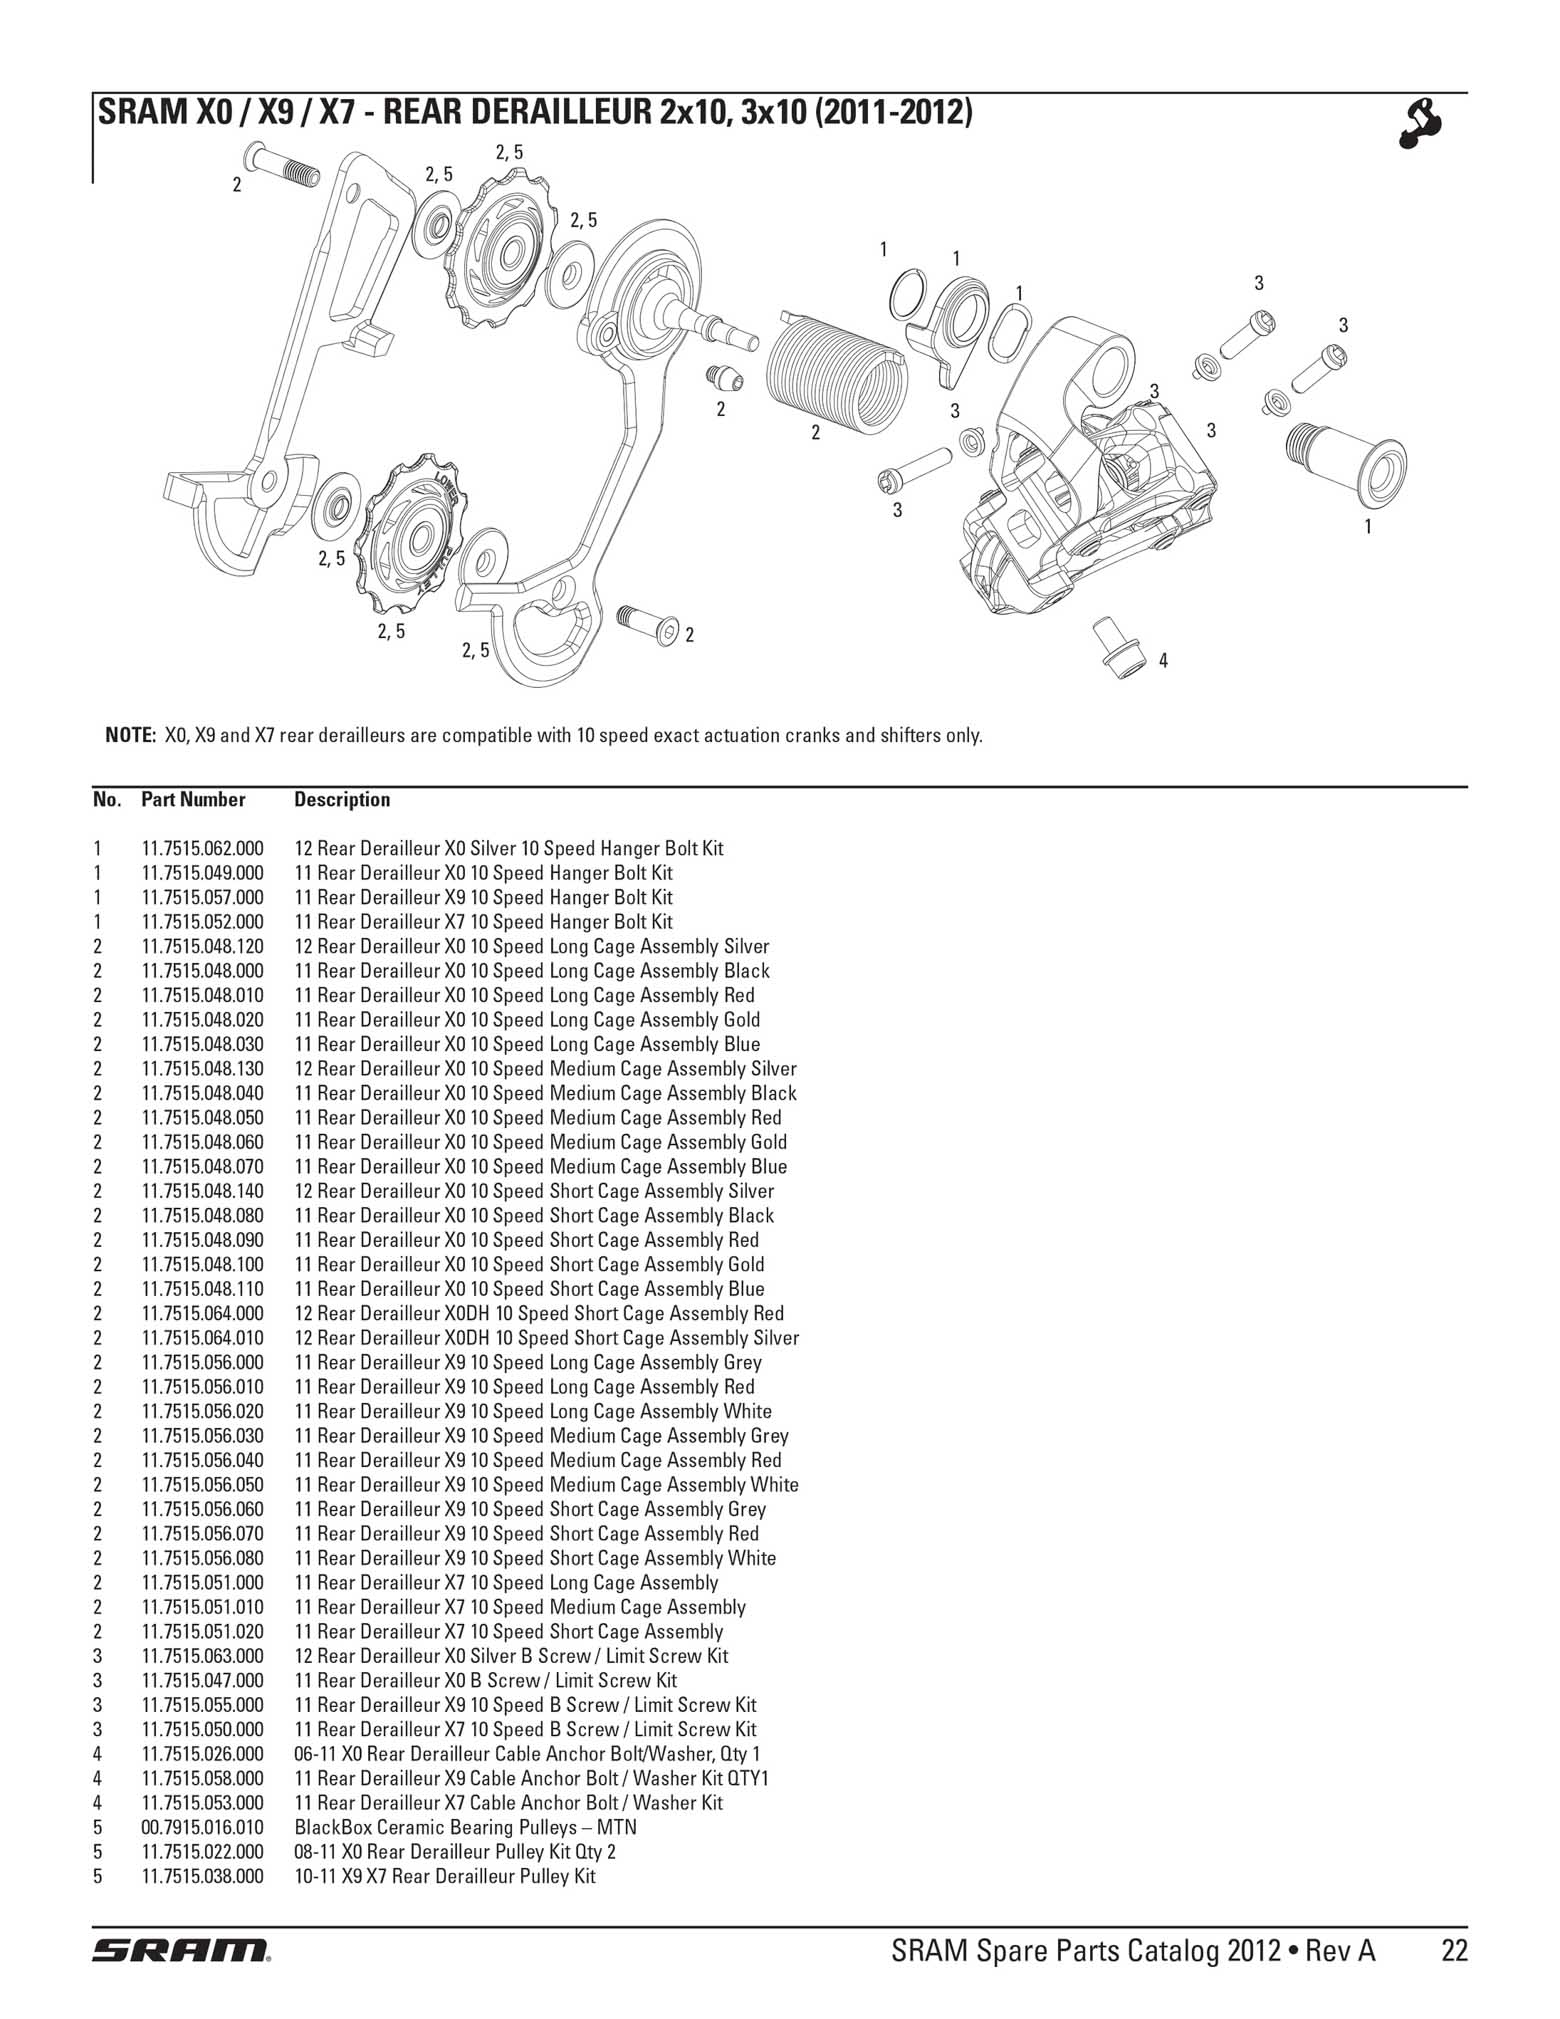 SRAM - Spare Parts Catalog 2012 page 022 main image